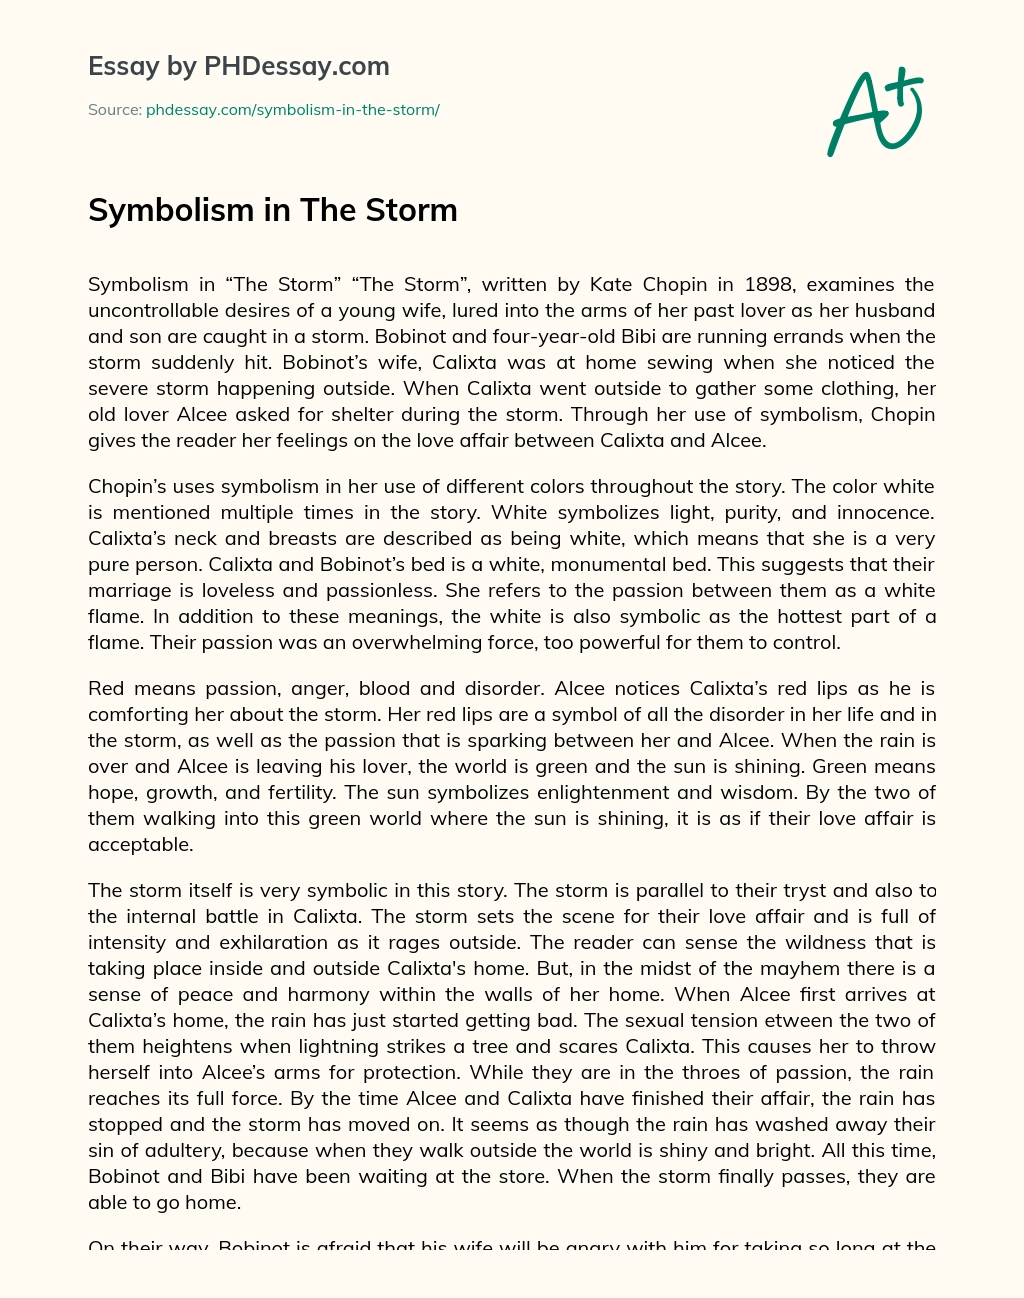 Symbolism in The Storm essay